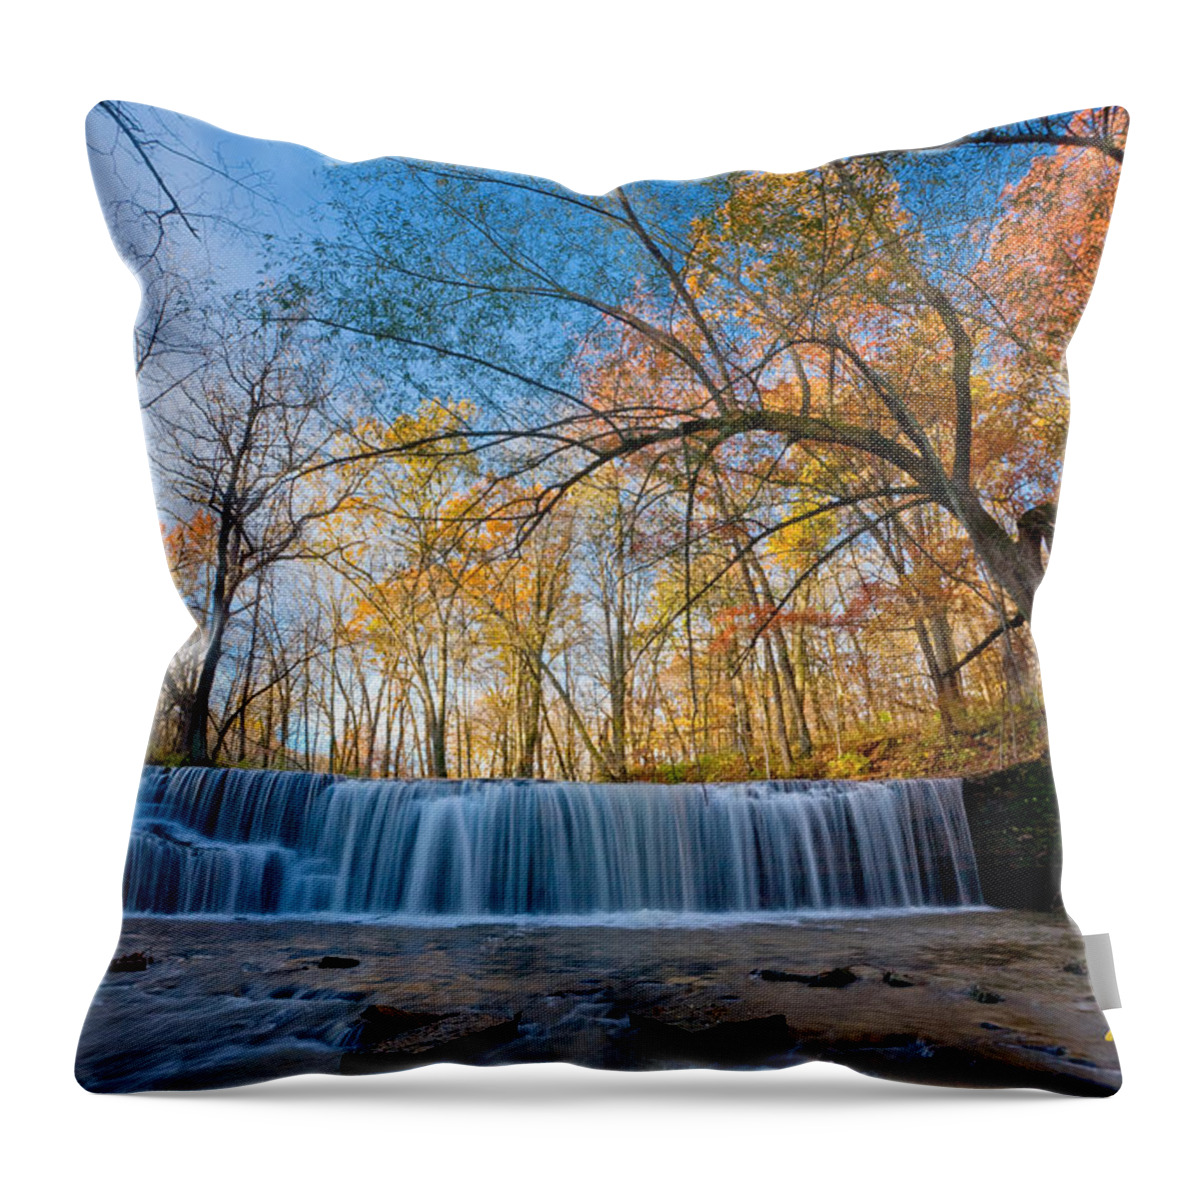 Autumn Throw Pillow featuring the photograph Hidden Falls in Autumn at full flow by Rikk Flohr